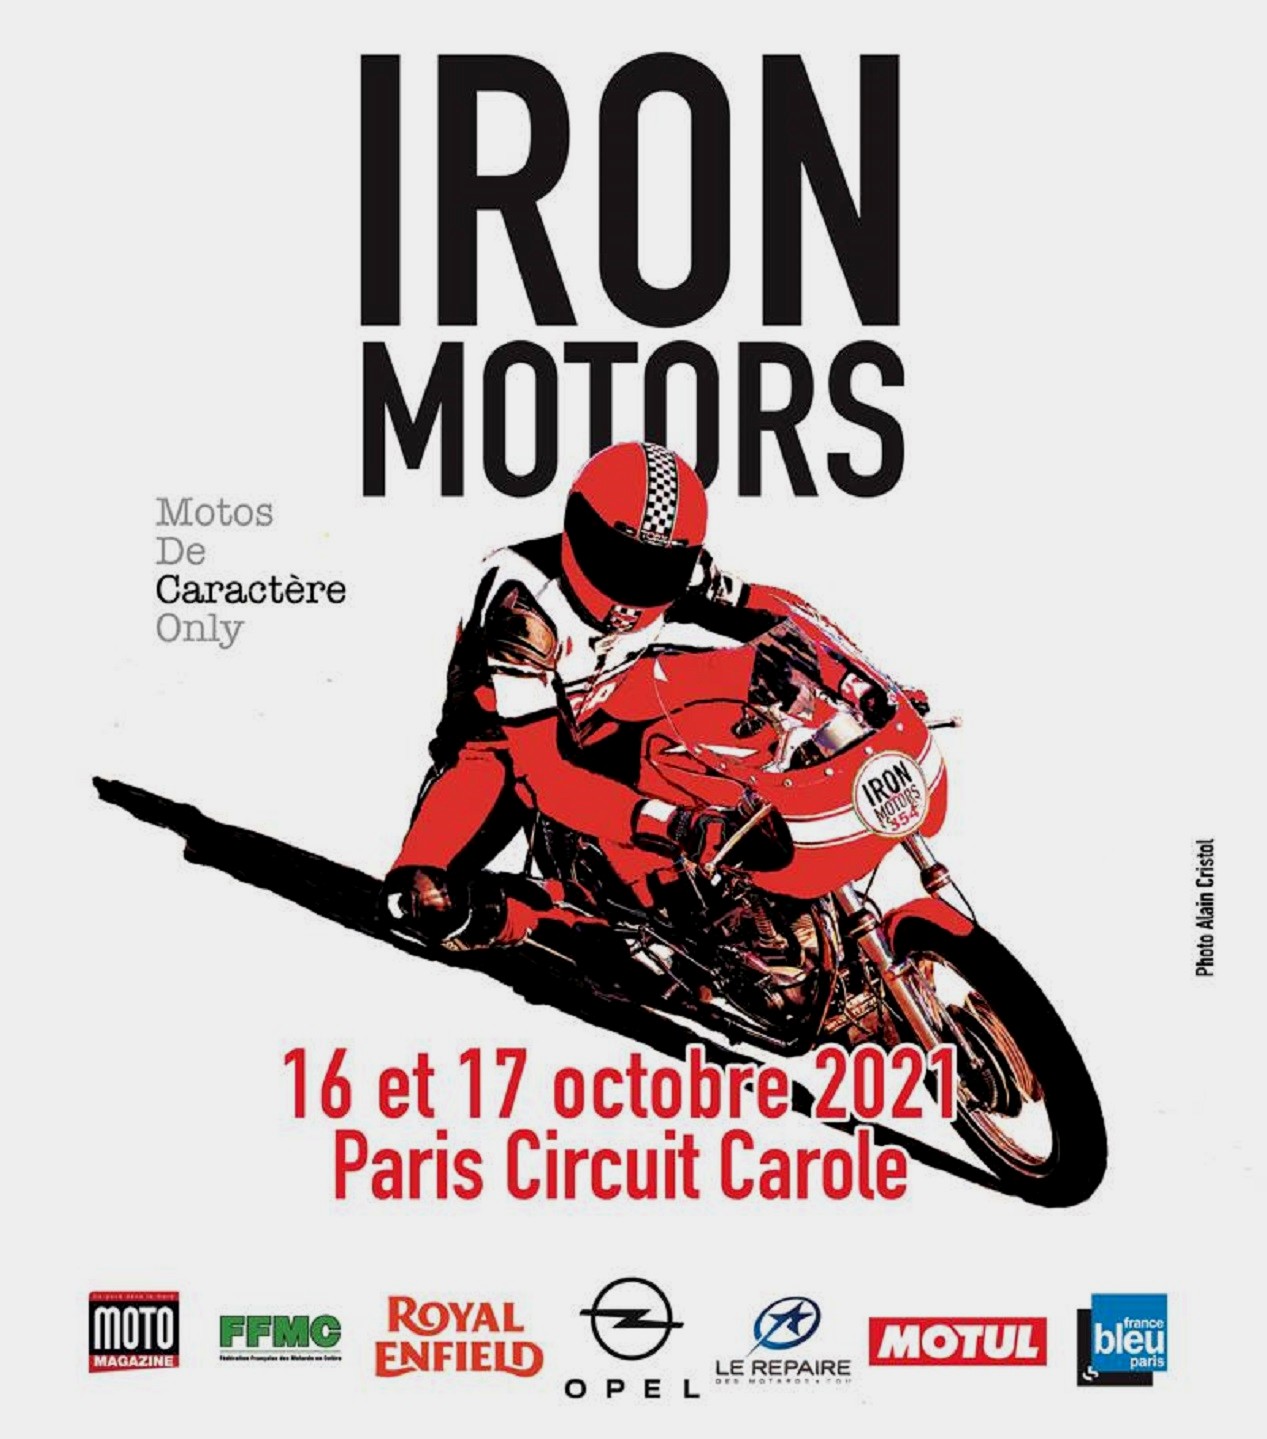 iron motors 2021 - Vintage